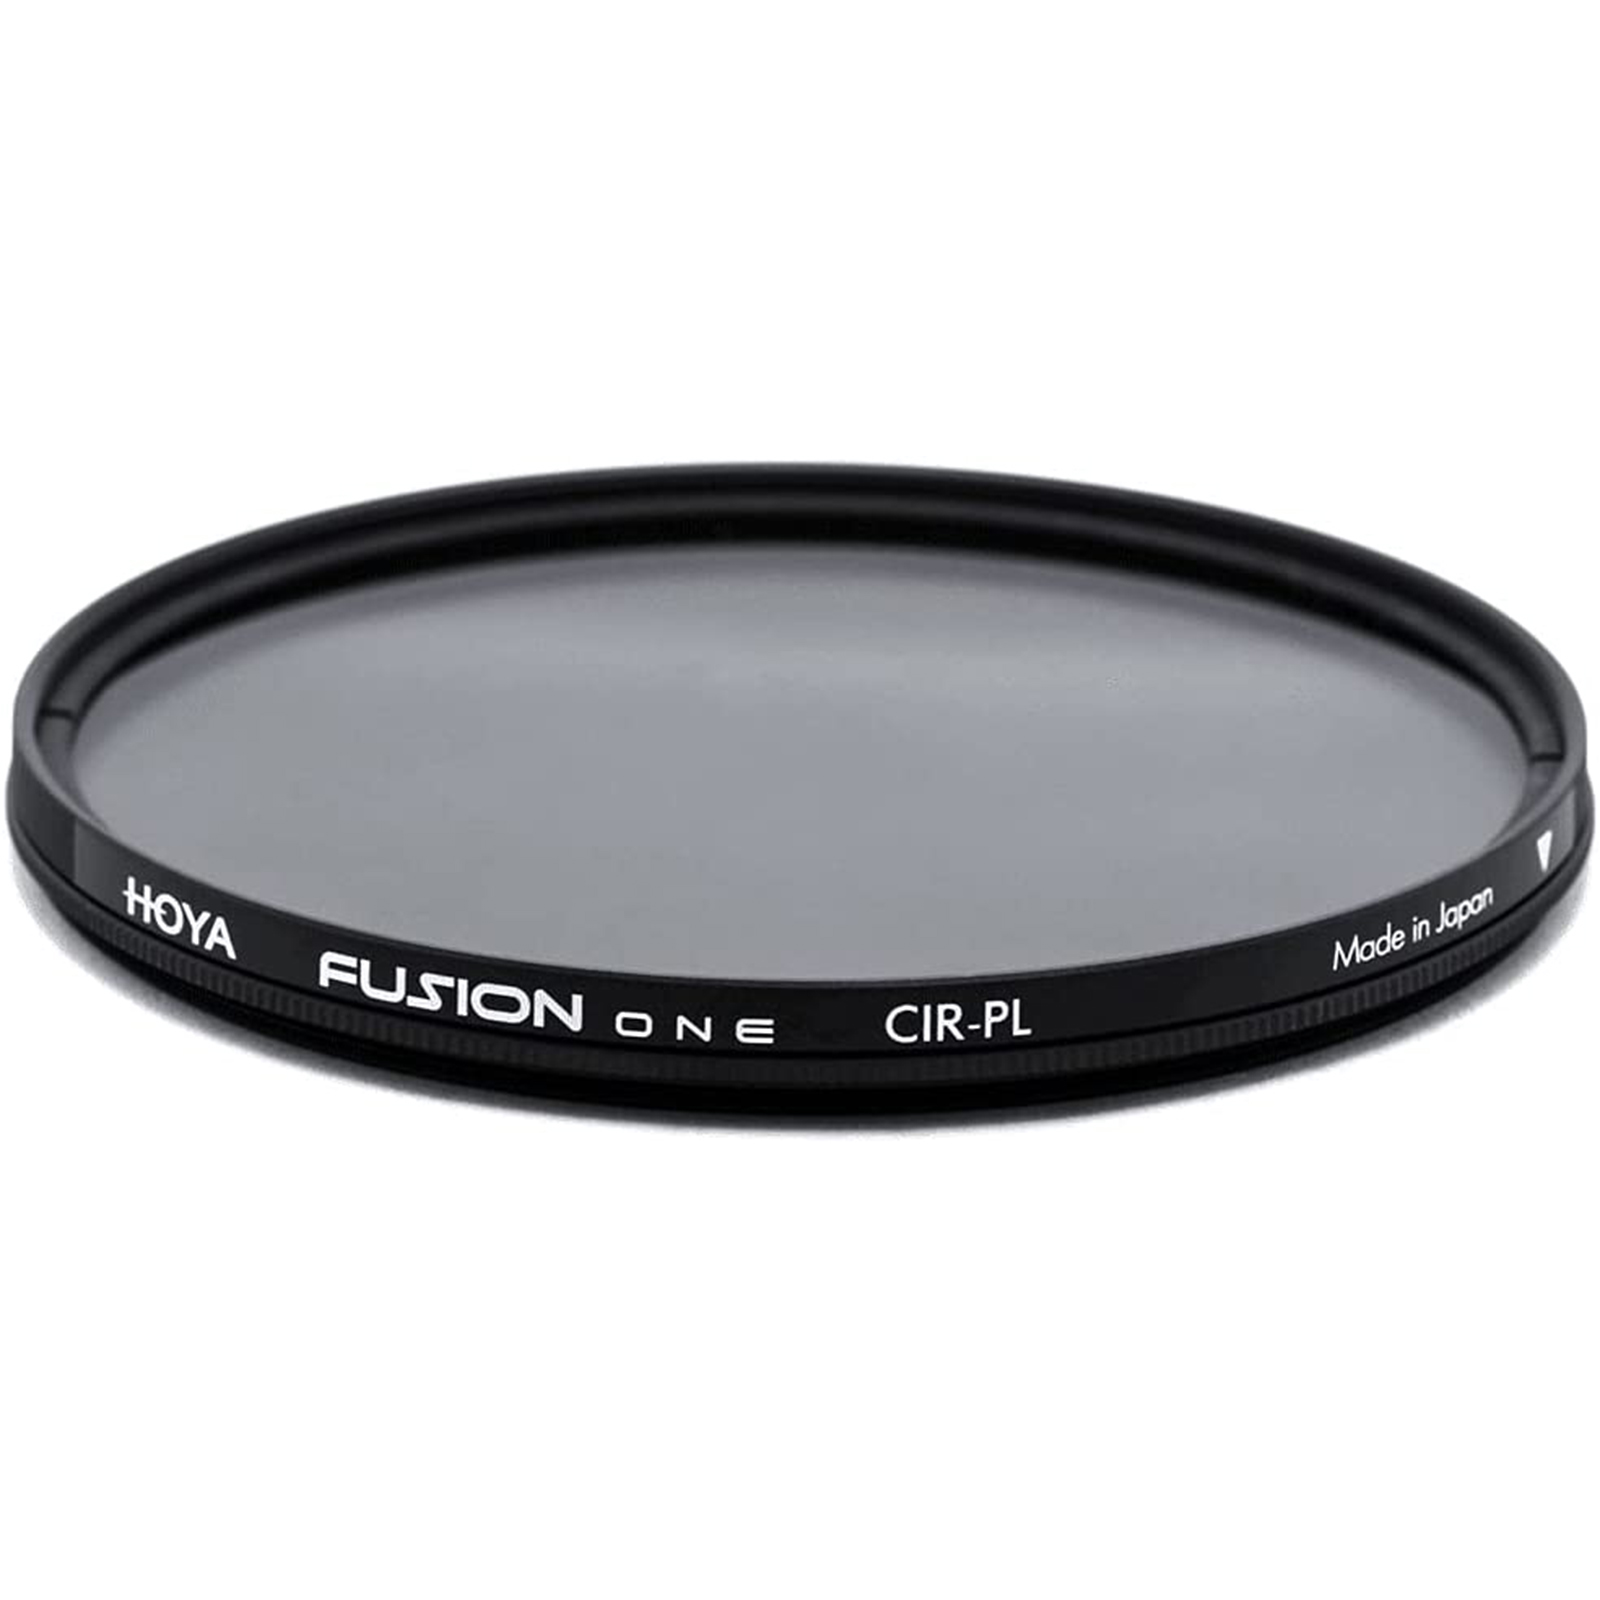 Image of Hoya 52mm Fusion AS Next PLCIR Filter